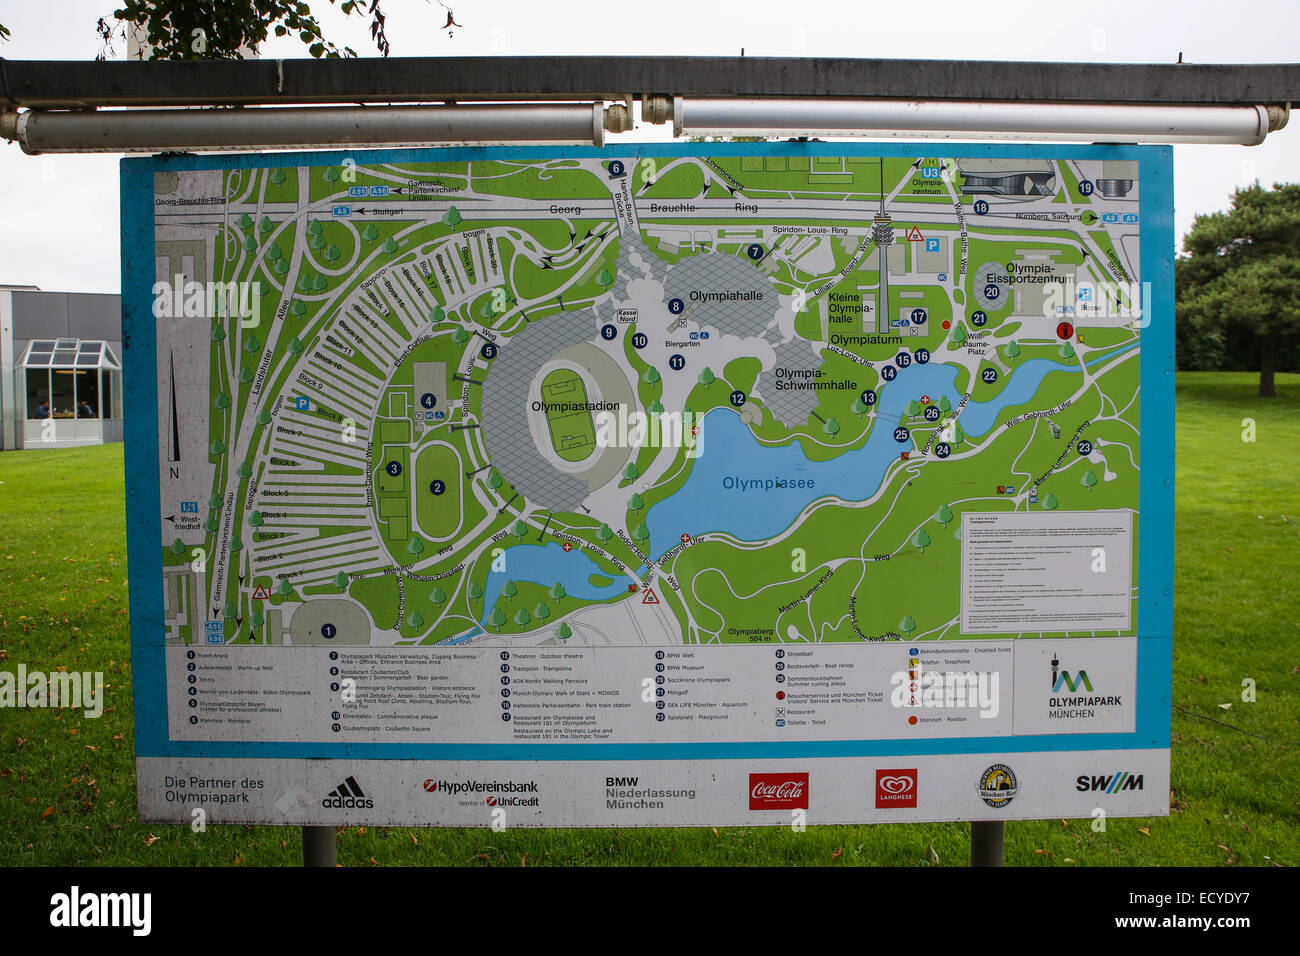 Olympiapark München Karte Deutschland Stockfotografie - Alamy